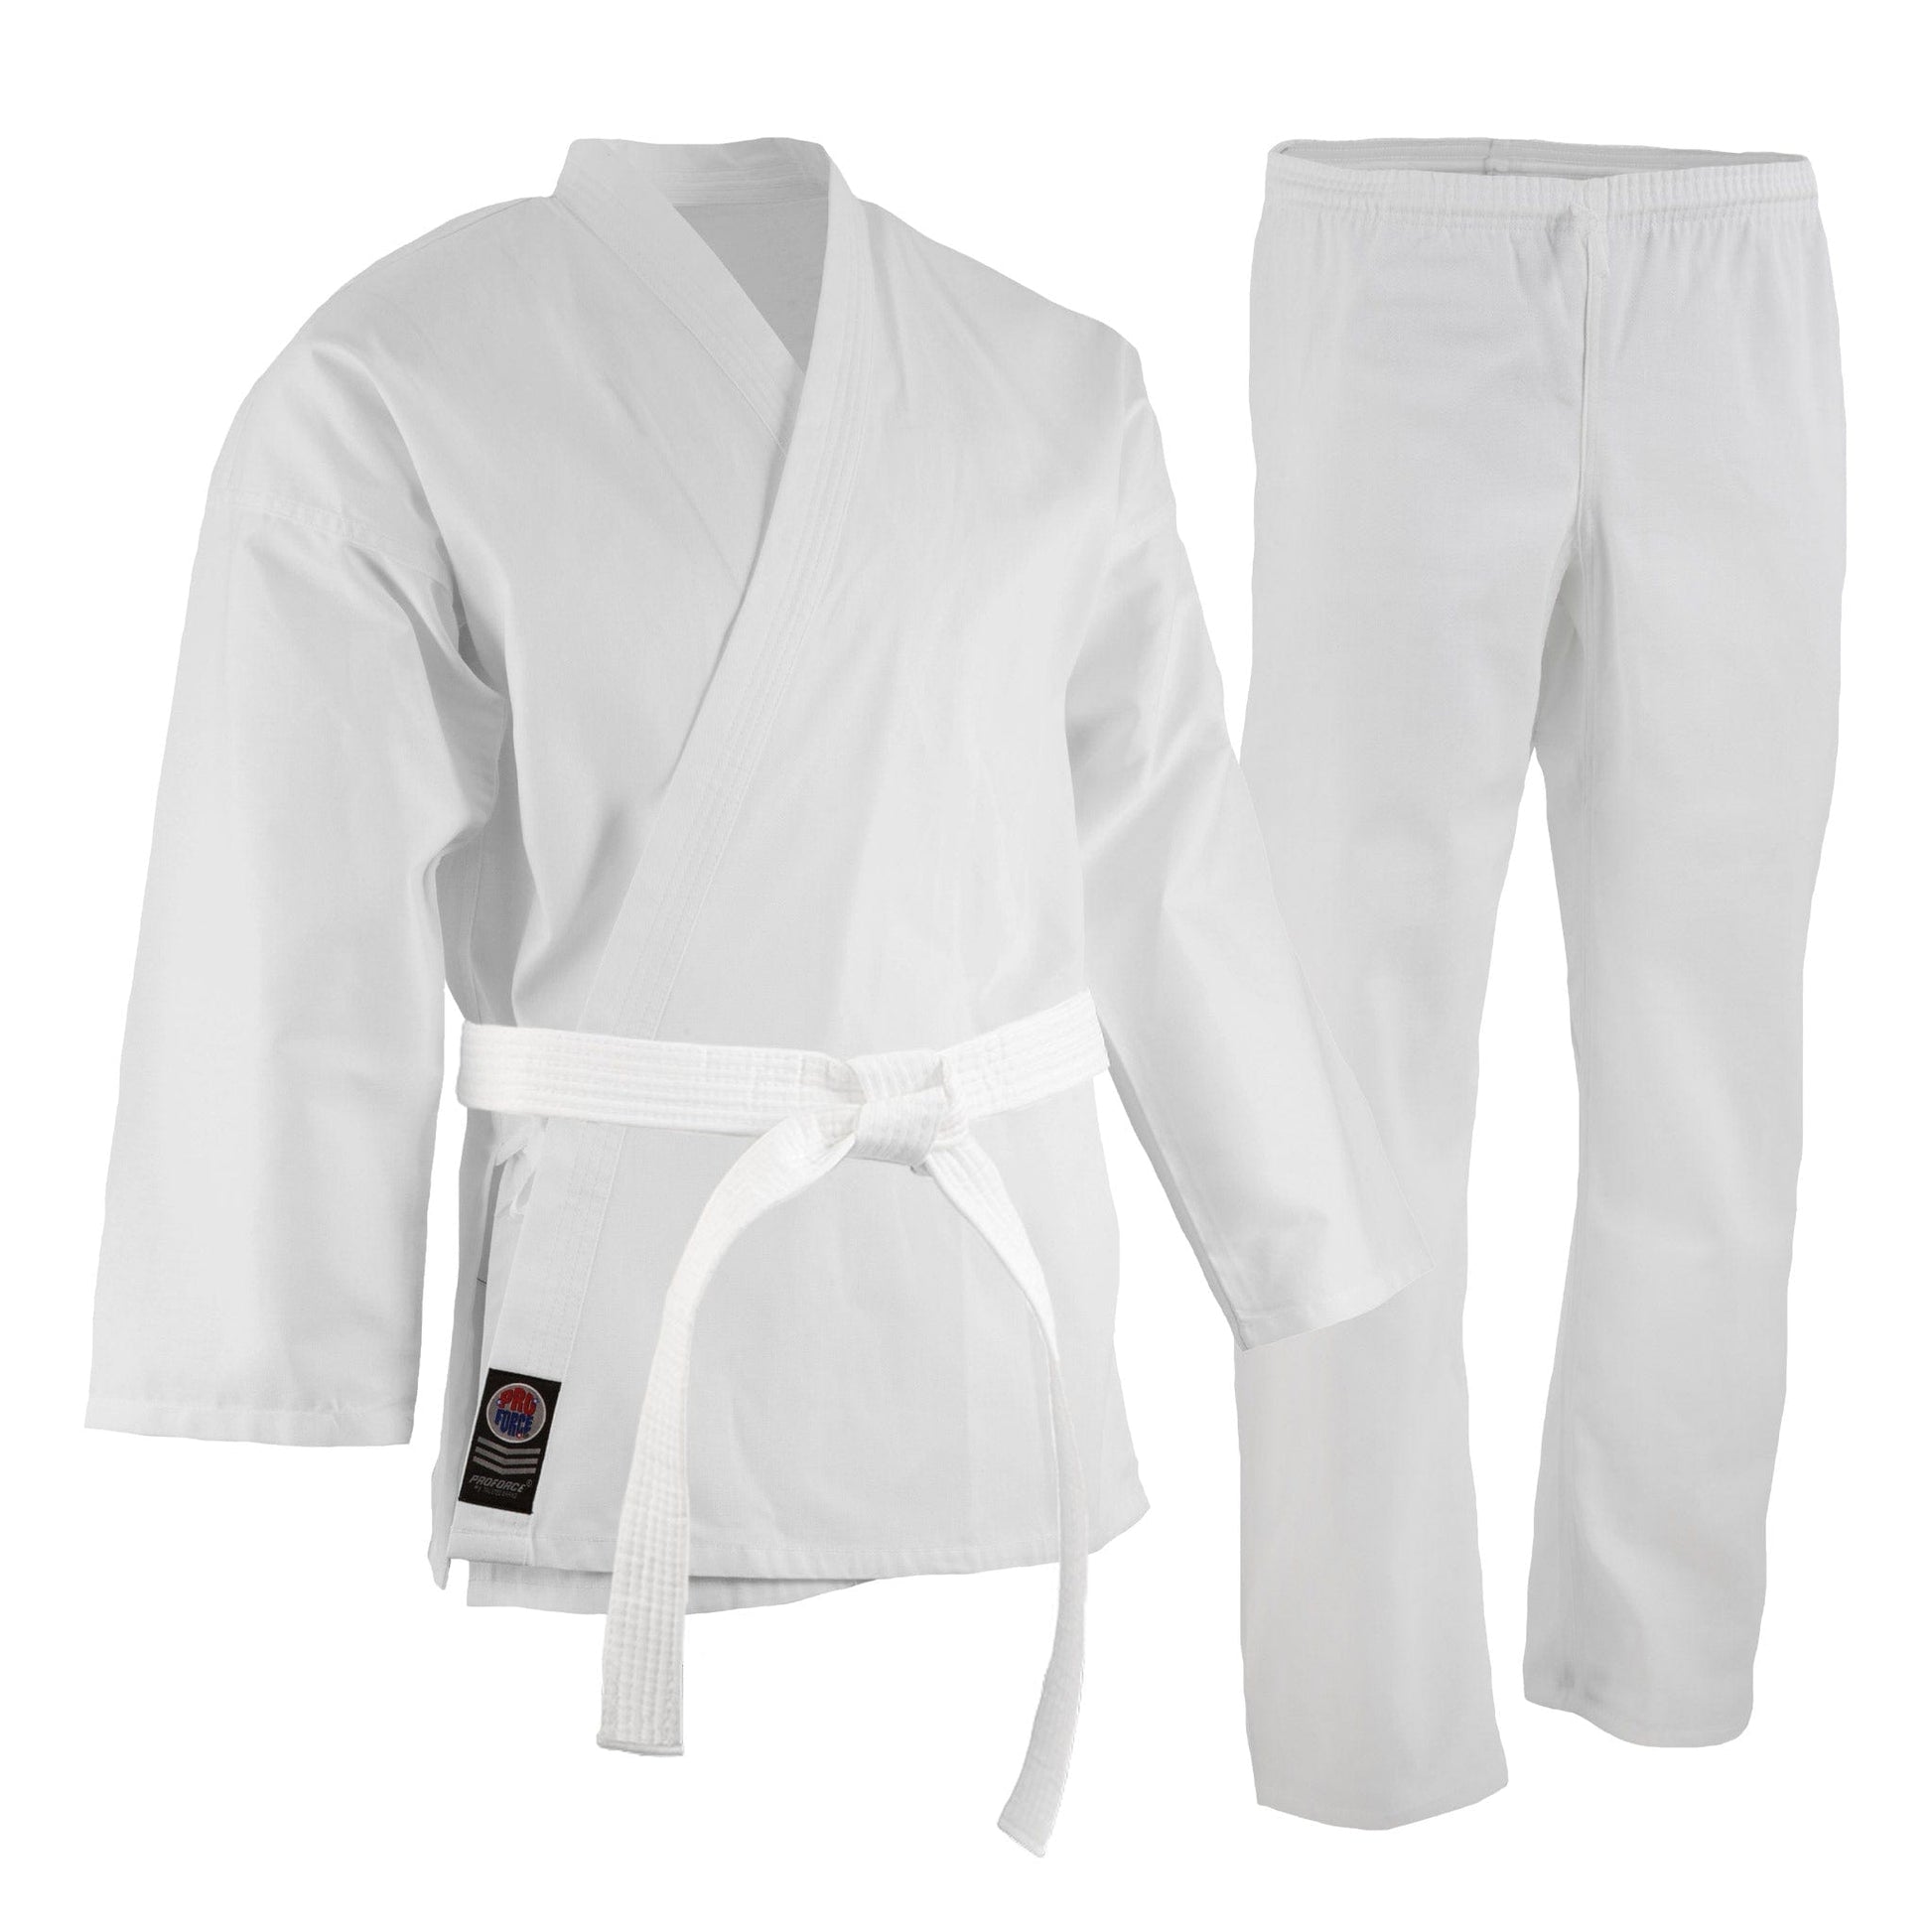 ProForce Karate Uniform White / 0000 ch xxx-small ProForce 6 oz Karate Uniform Elastic Drawstring Pants poly cotton blend White